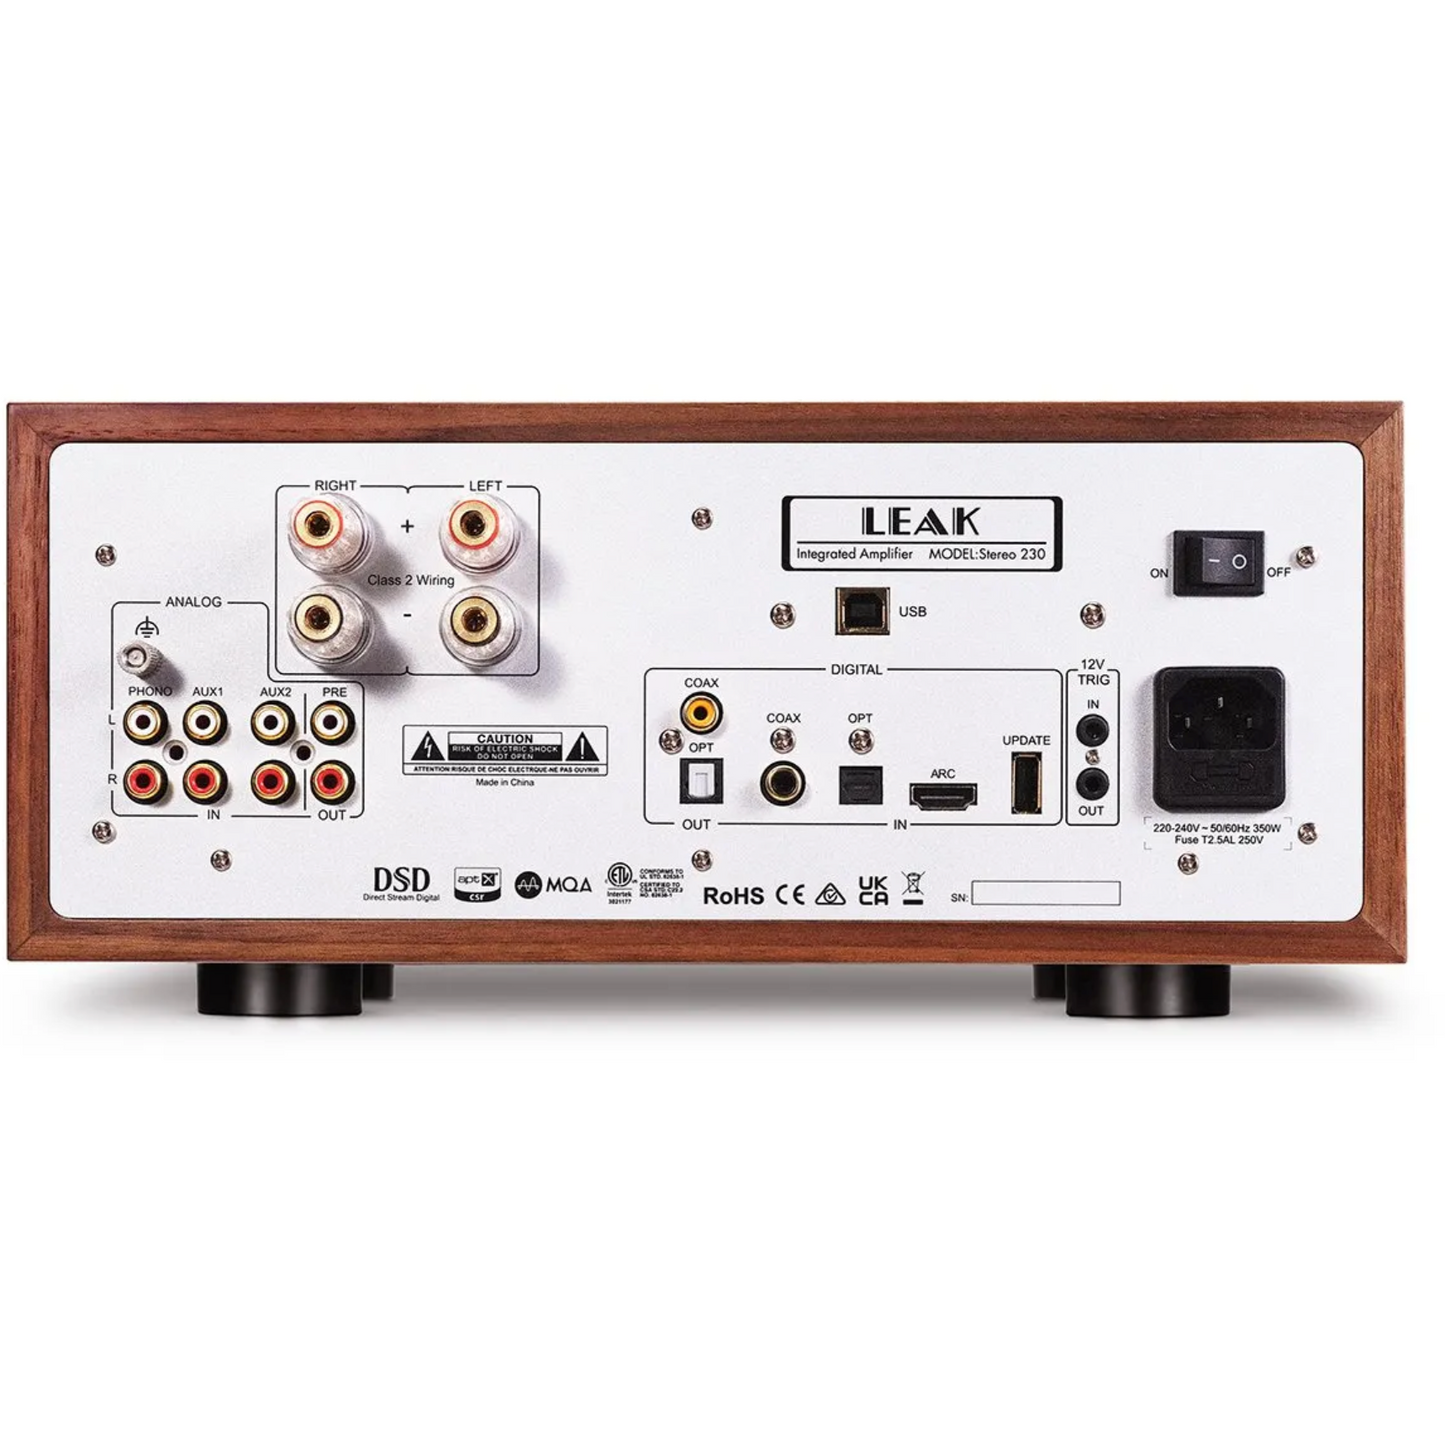 LEAK - Stereo 230 Integrated Amplifier